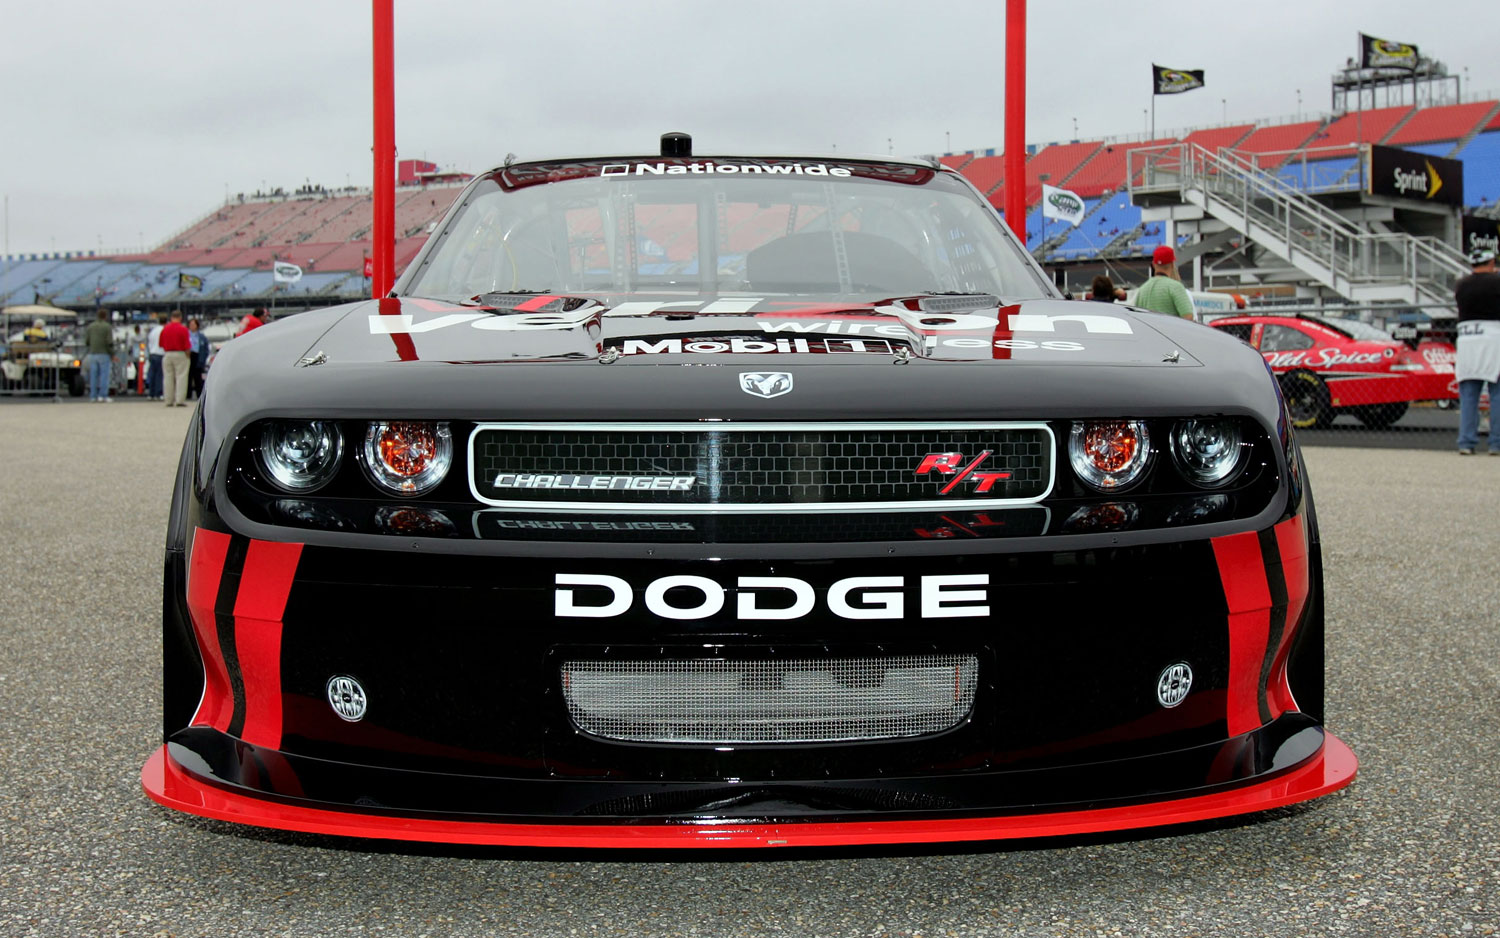 Dodge-Challenger-Nationwide-NASCAR-Car-front-view.jpg